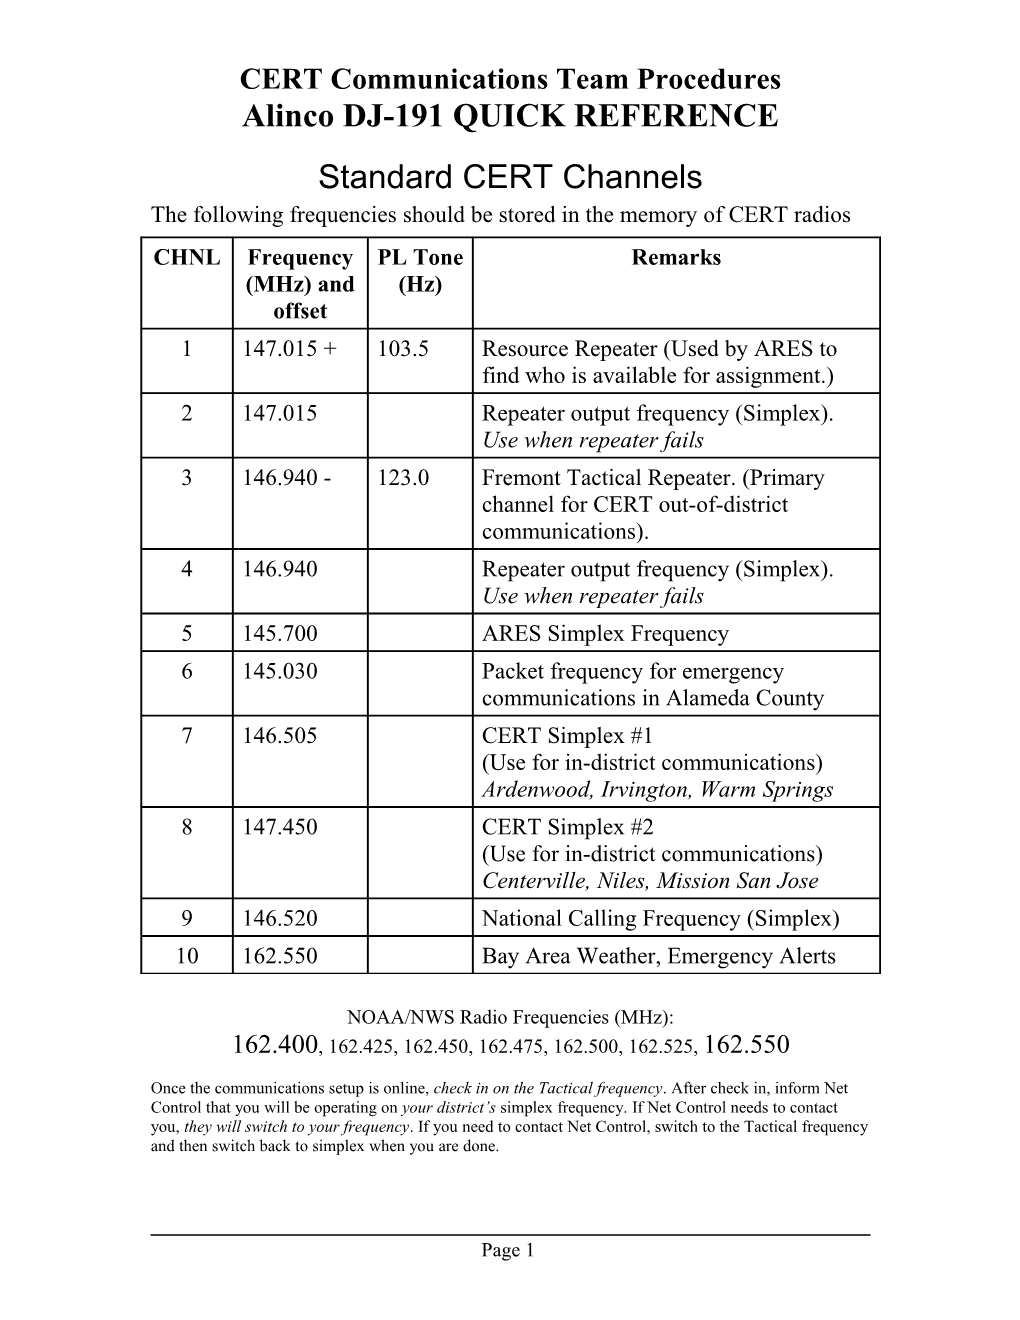 Standard CERT Channels